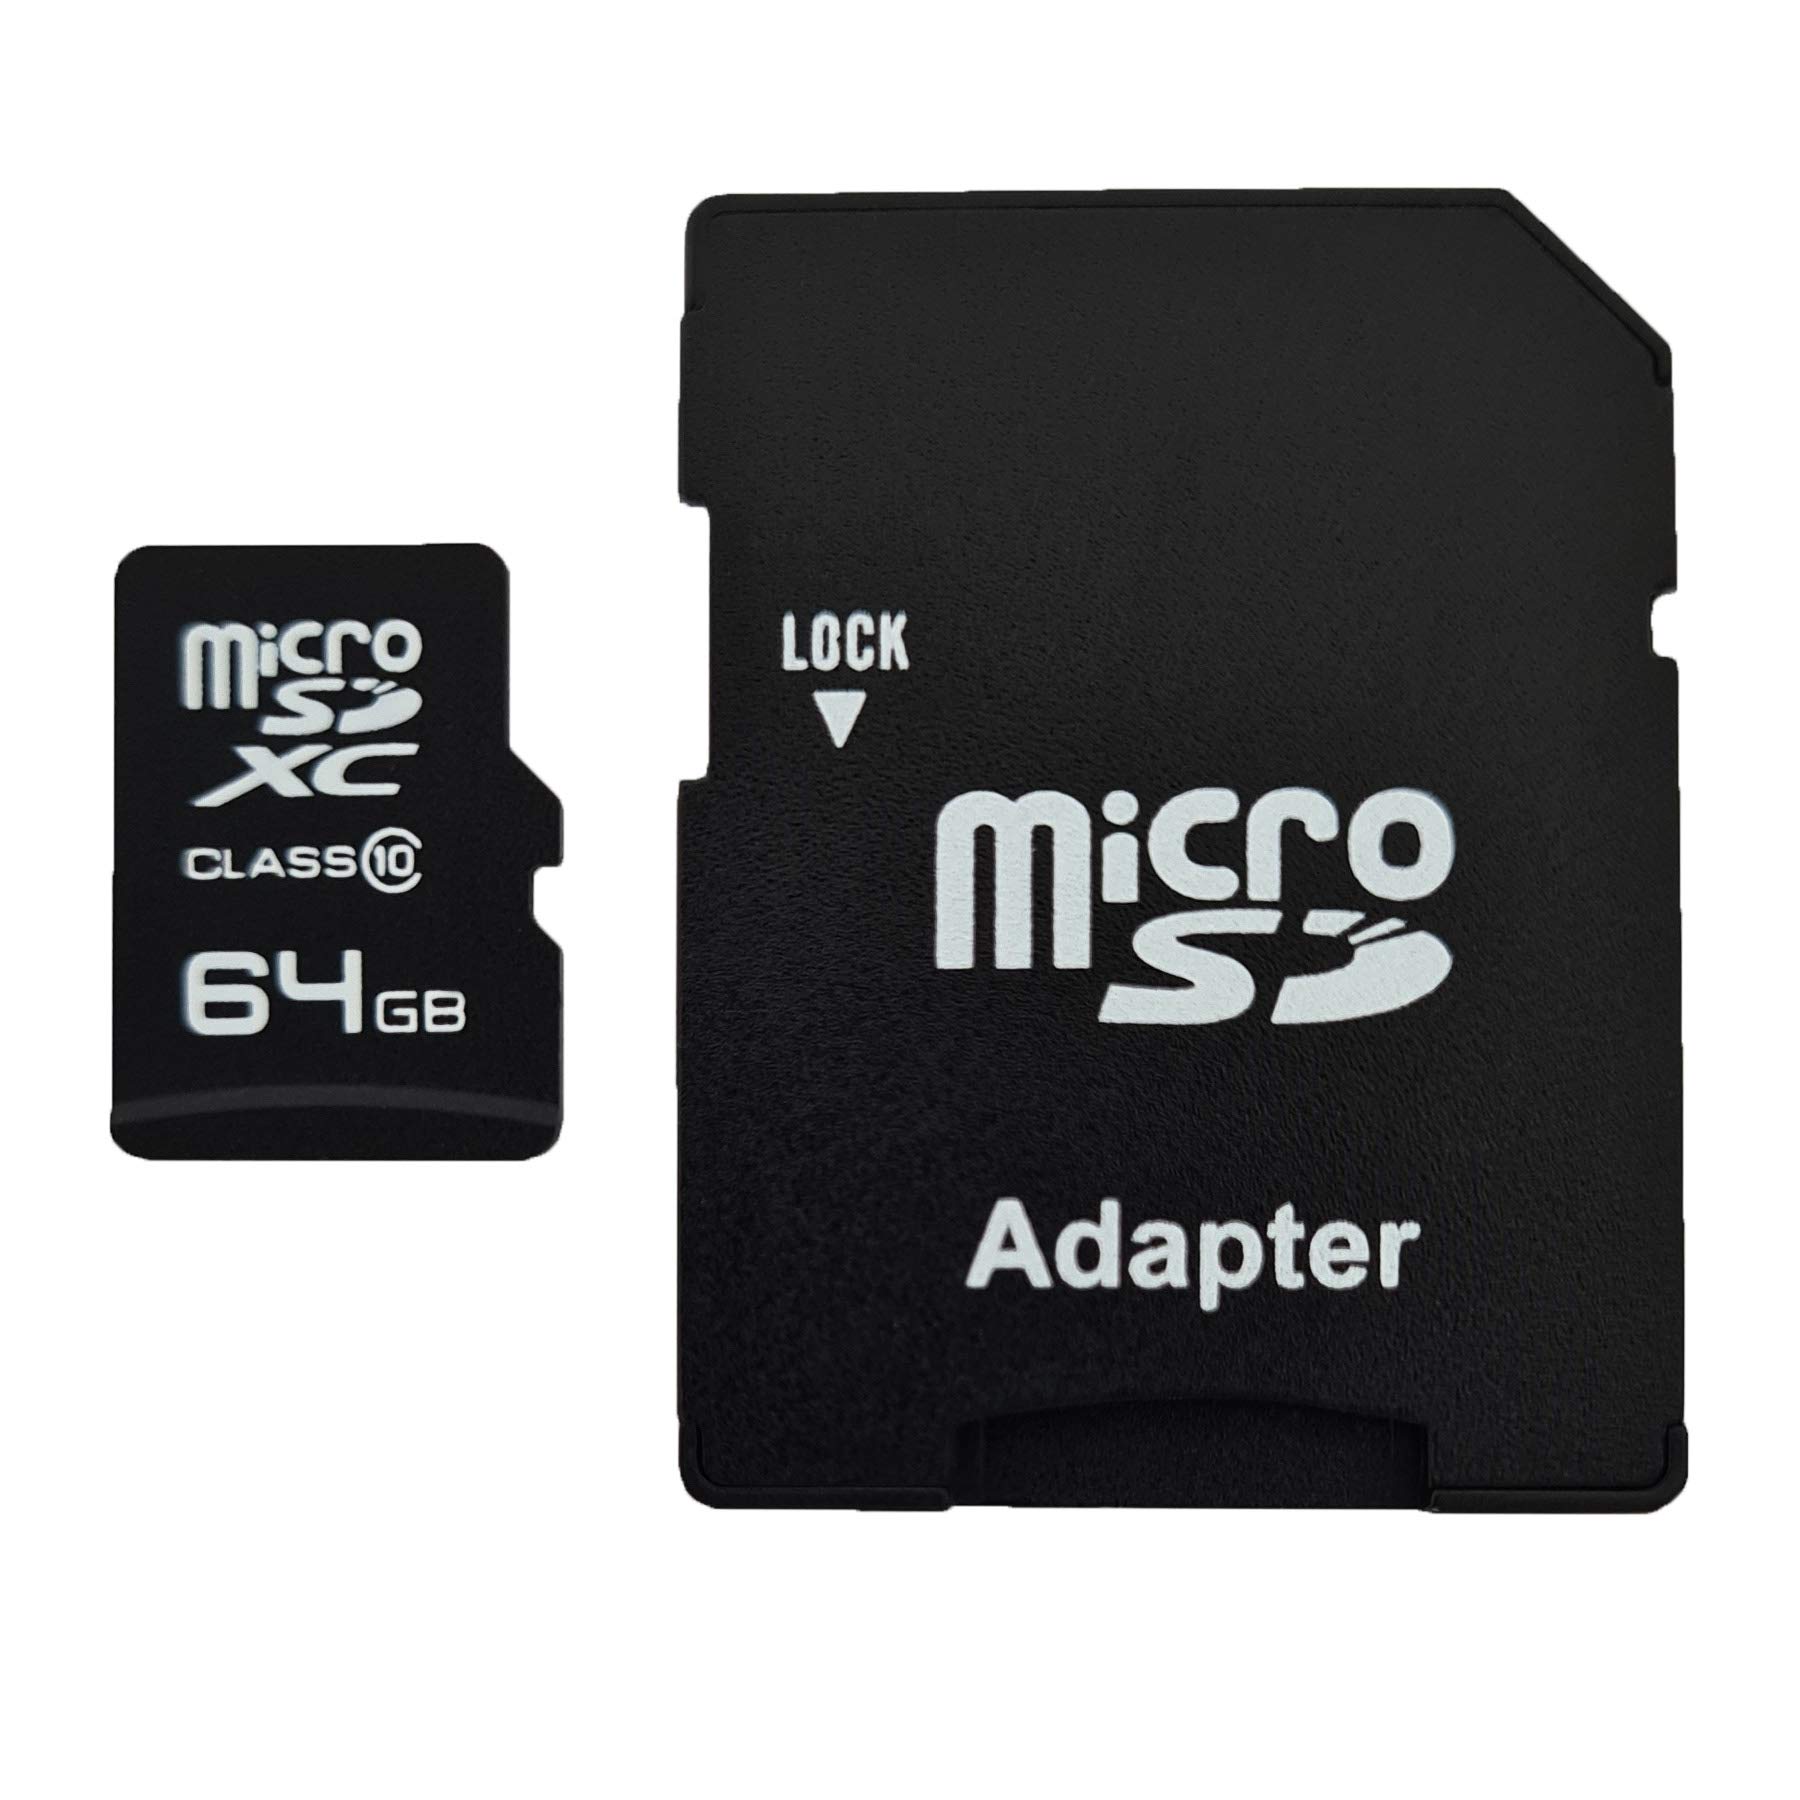 dekoelektropunktde 64GB MicroSDXC Speicherkarte mit Adapter Class 10 kompatibel für Samsung Galaxy Young DUOS